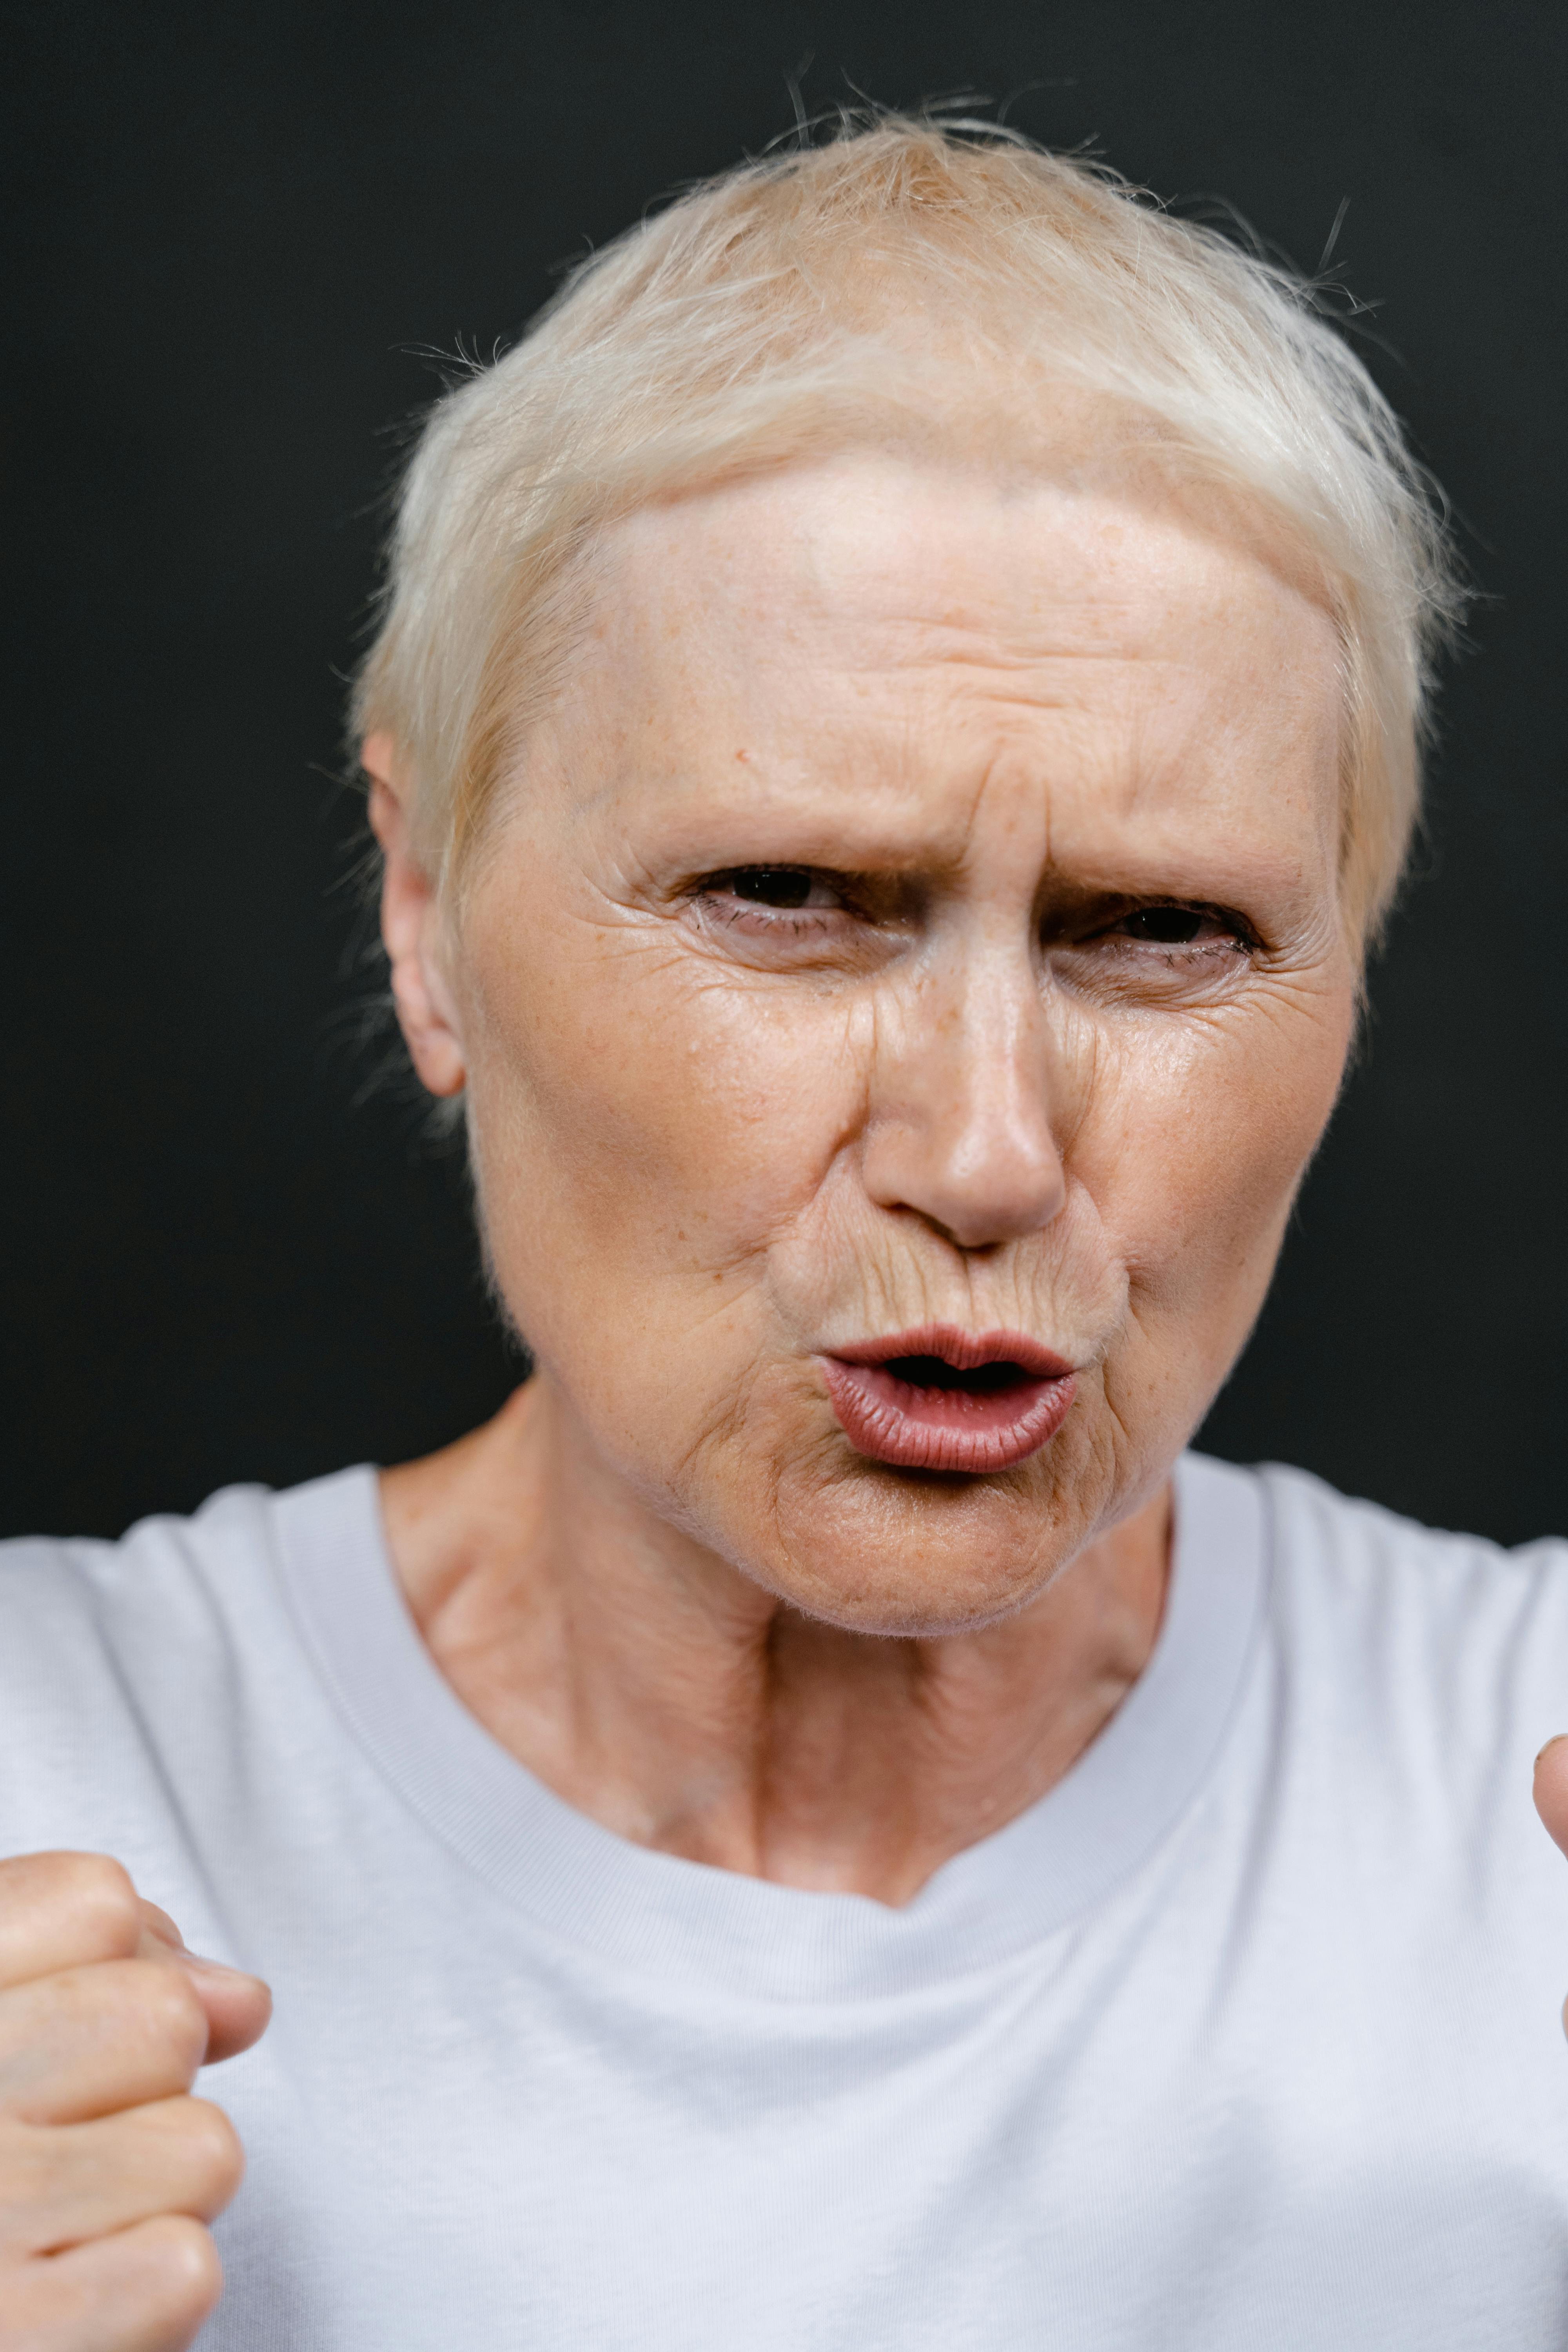 An upset elderly woman complaining | Source: Pexels